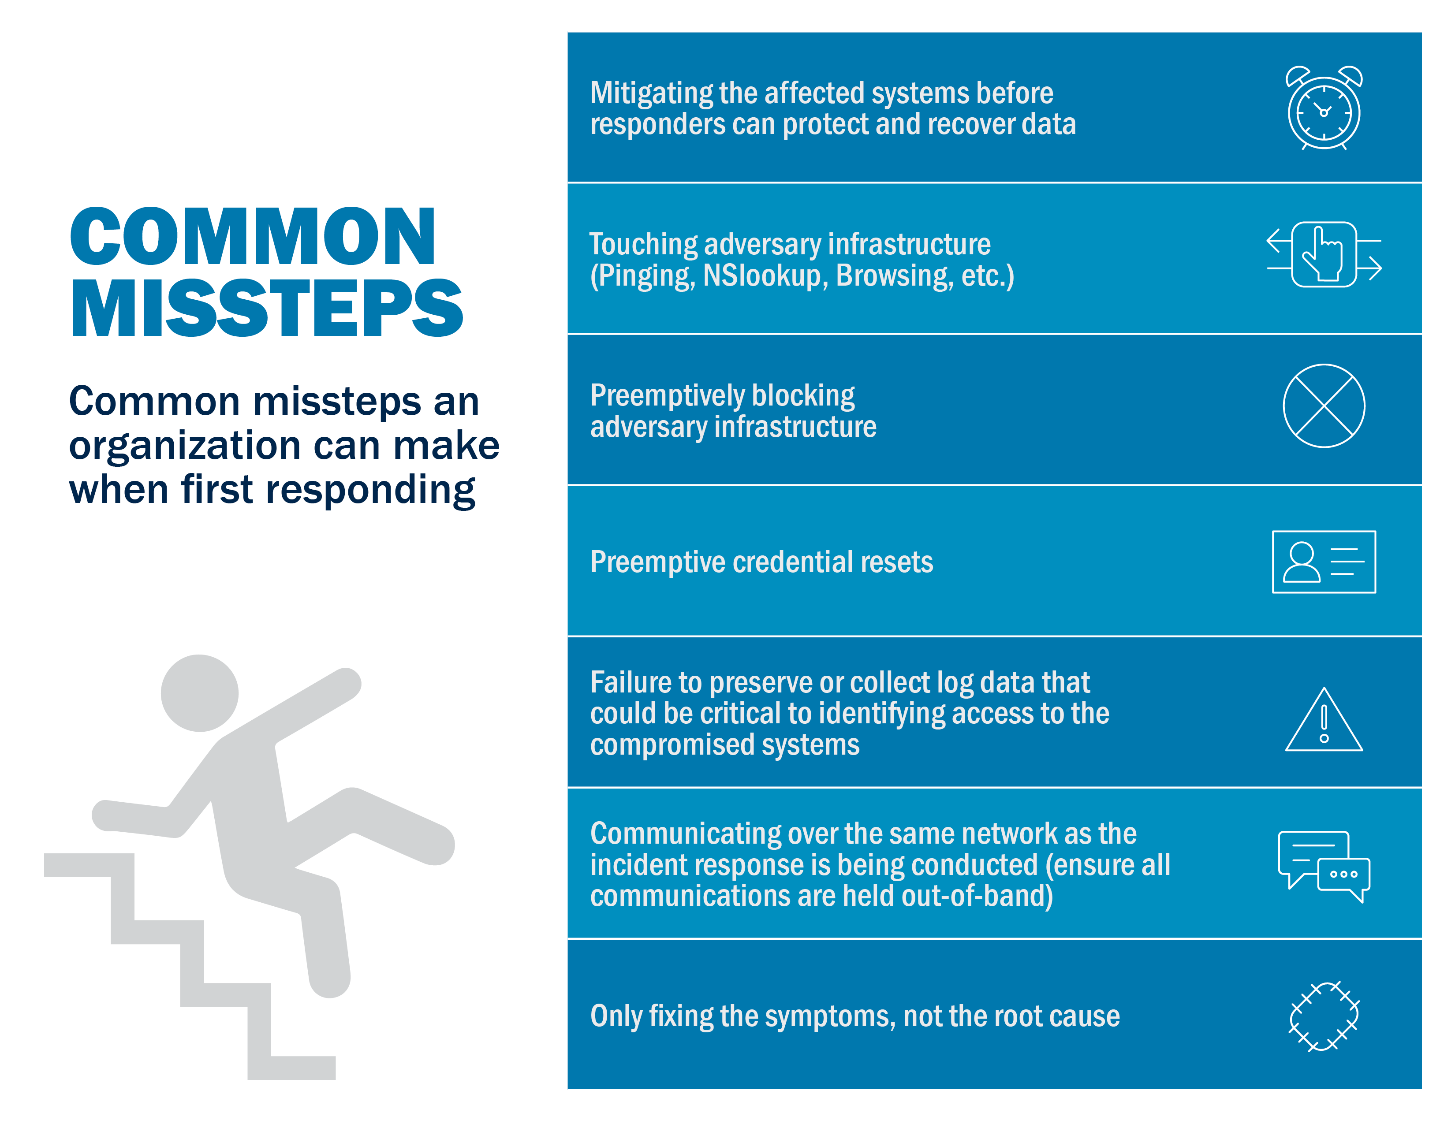 Top 5 Most Common Incident Response Scenarios